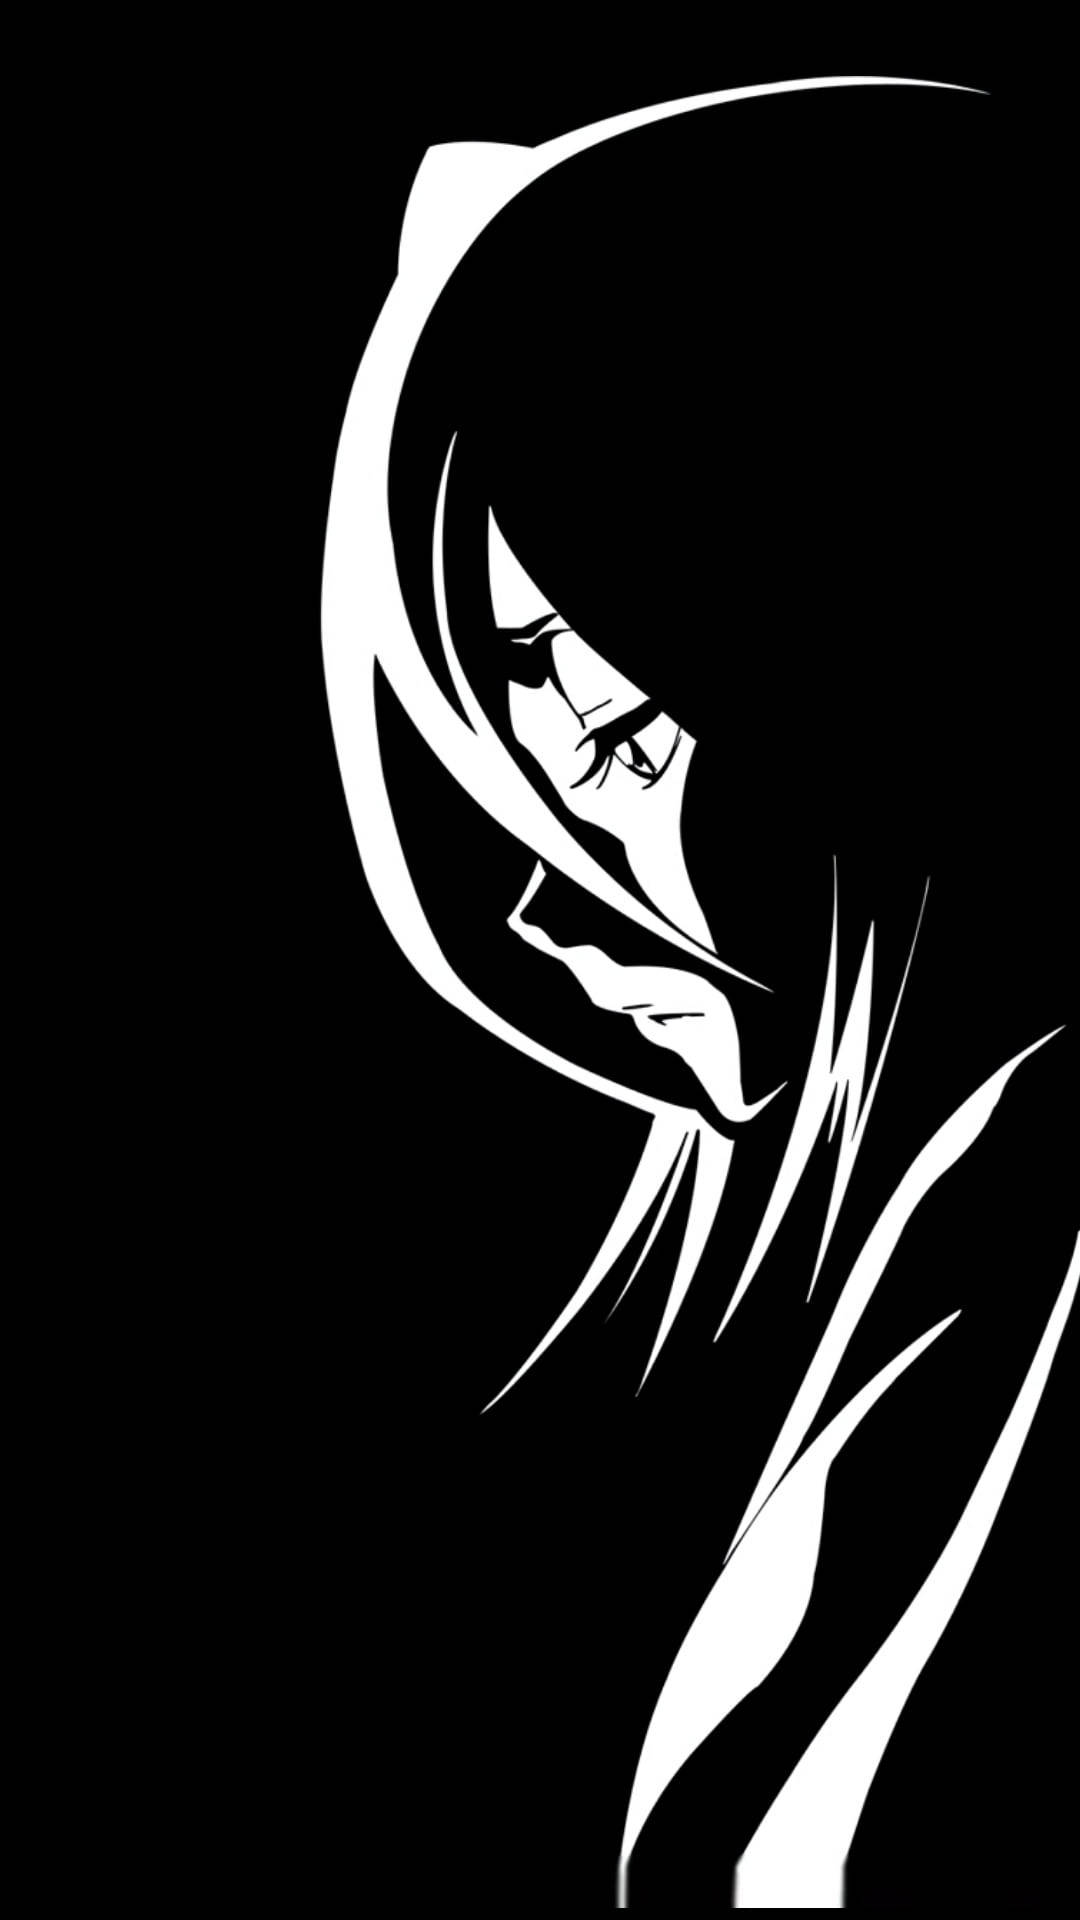 Aesthetic Sad Anime Girl Black And White Background